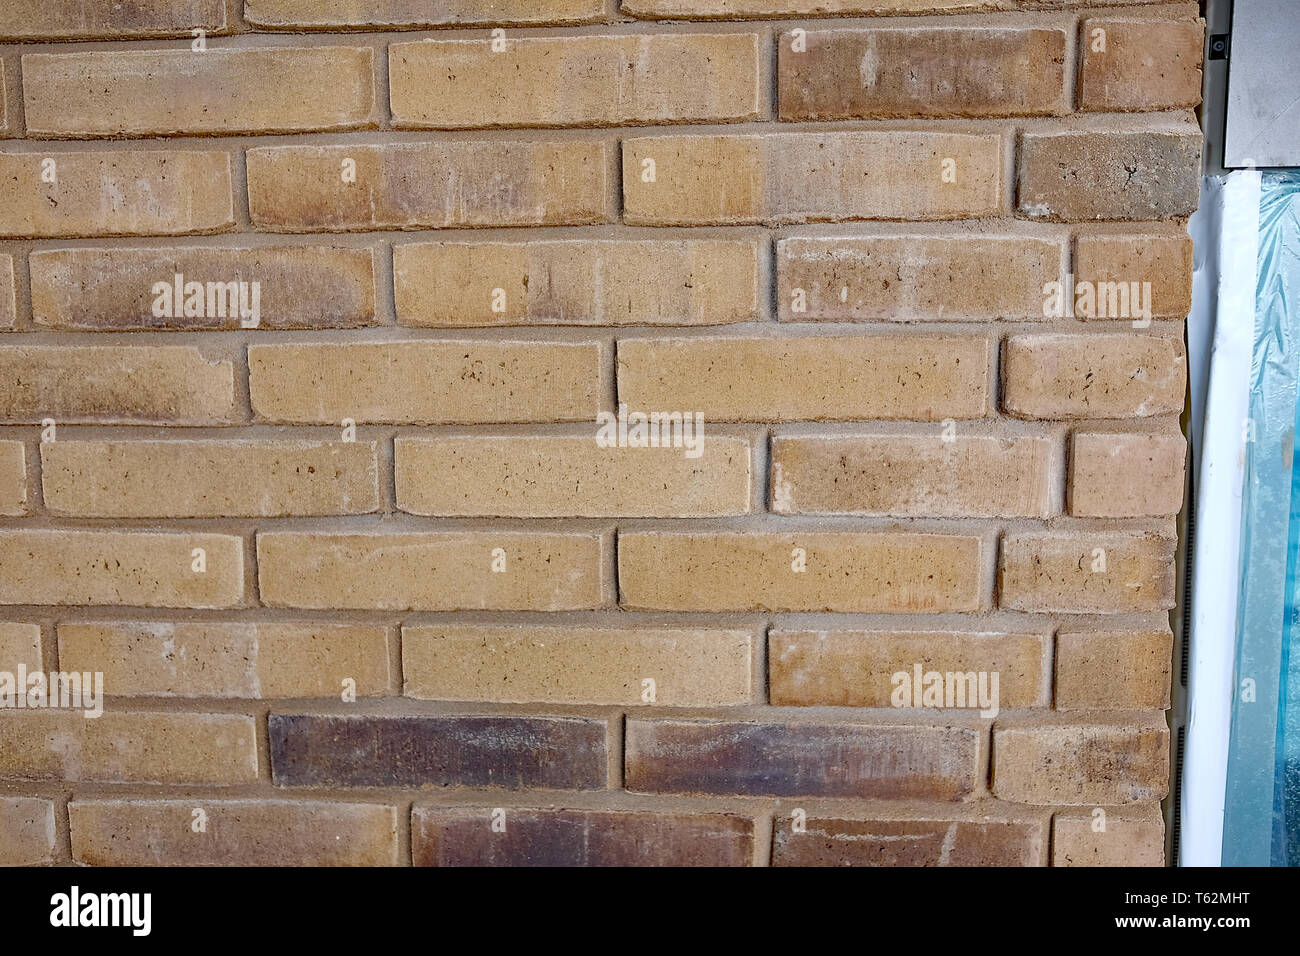 April 2019 - Uneven brickwork,with uneven sized bricks. Stock Photo